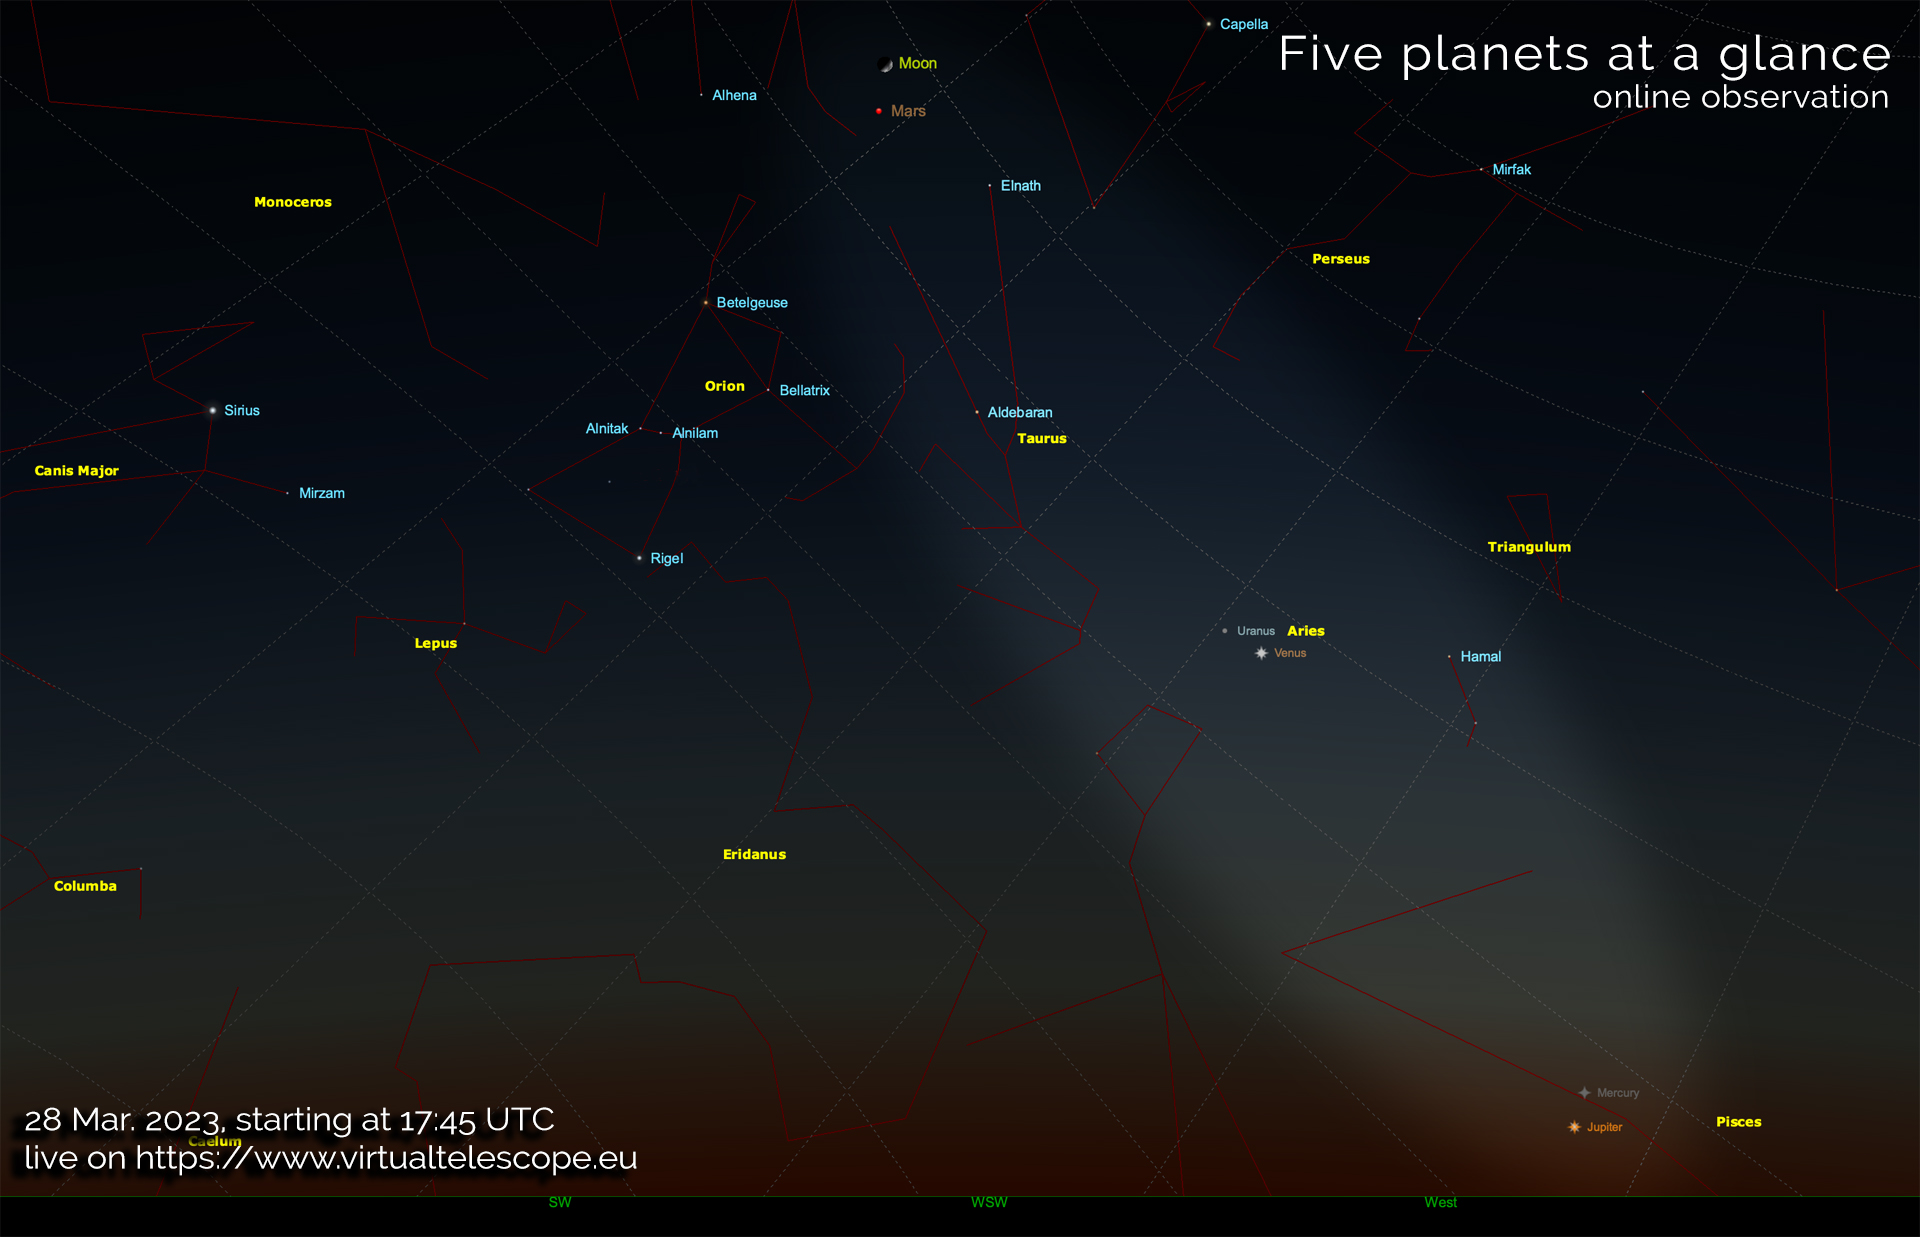 Five planets at a glance - online observation (28 Mar. 2023)